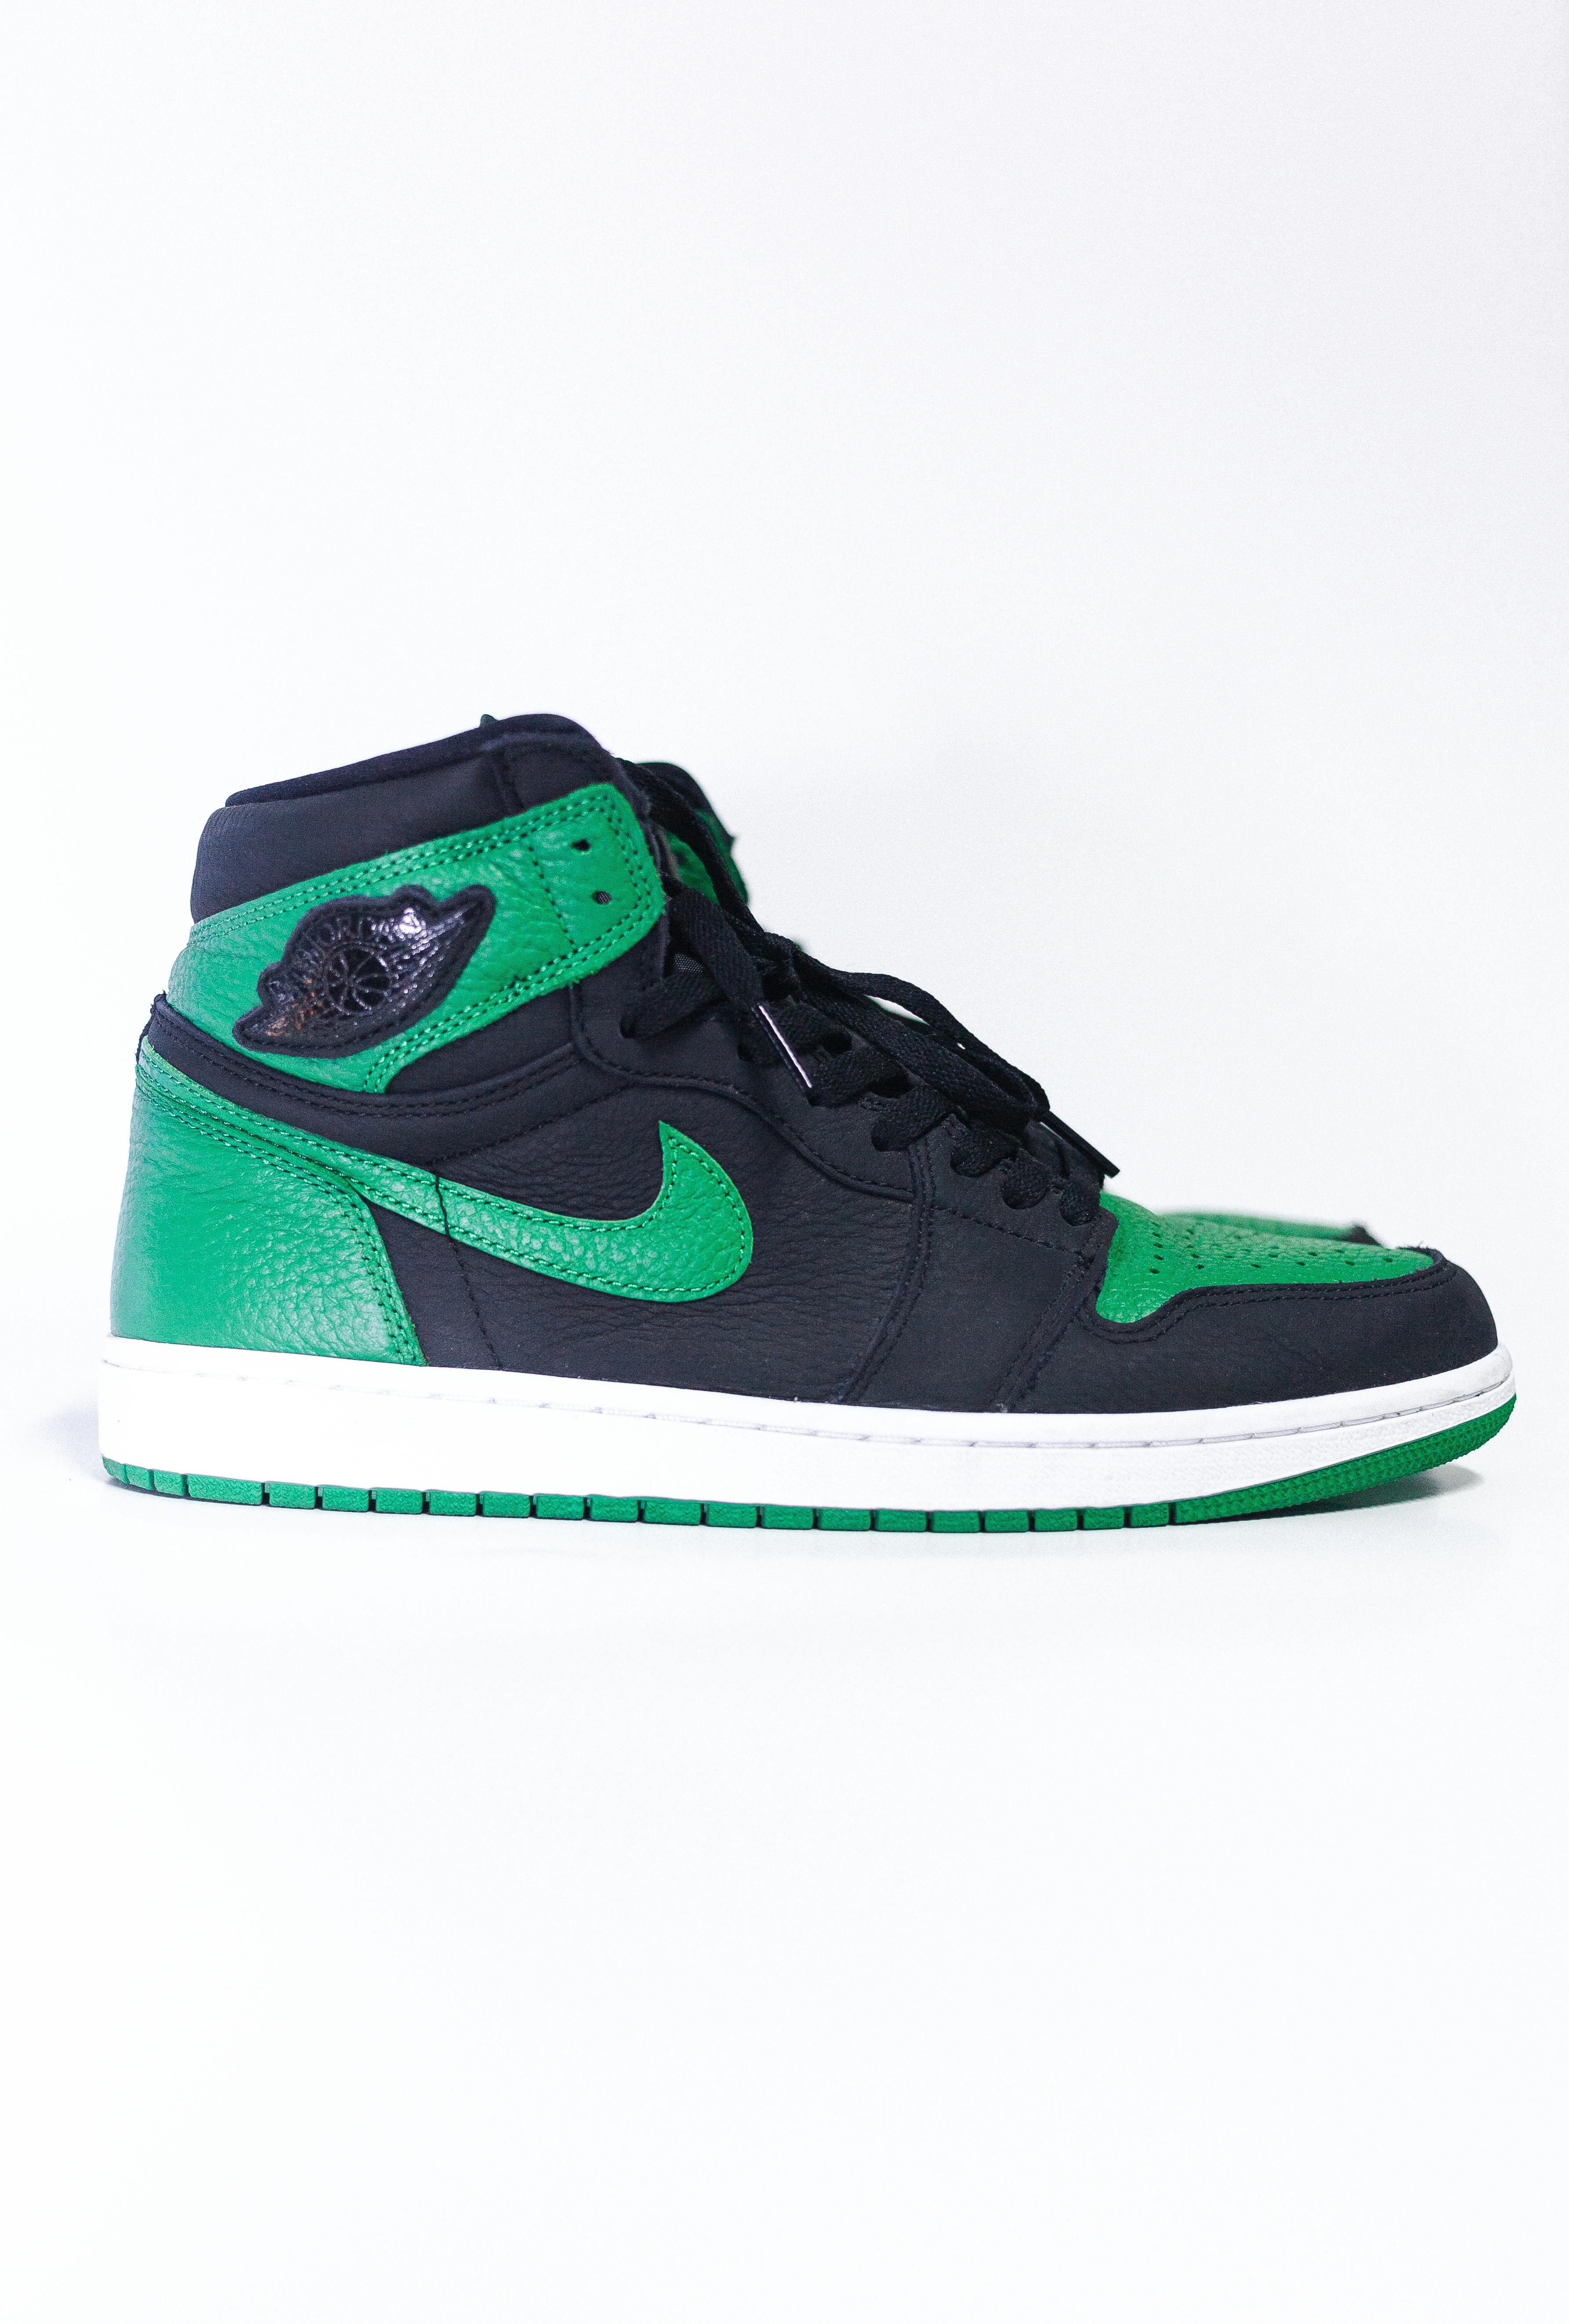 Salie transmissie tobben A Black and Green Jordan Nike Shoes · Free Stock Photo